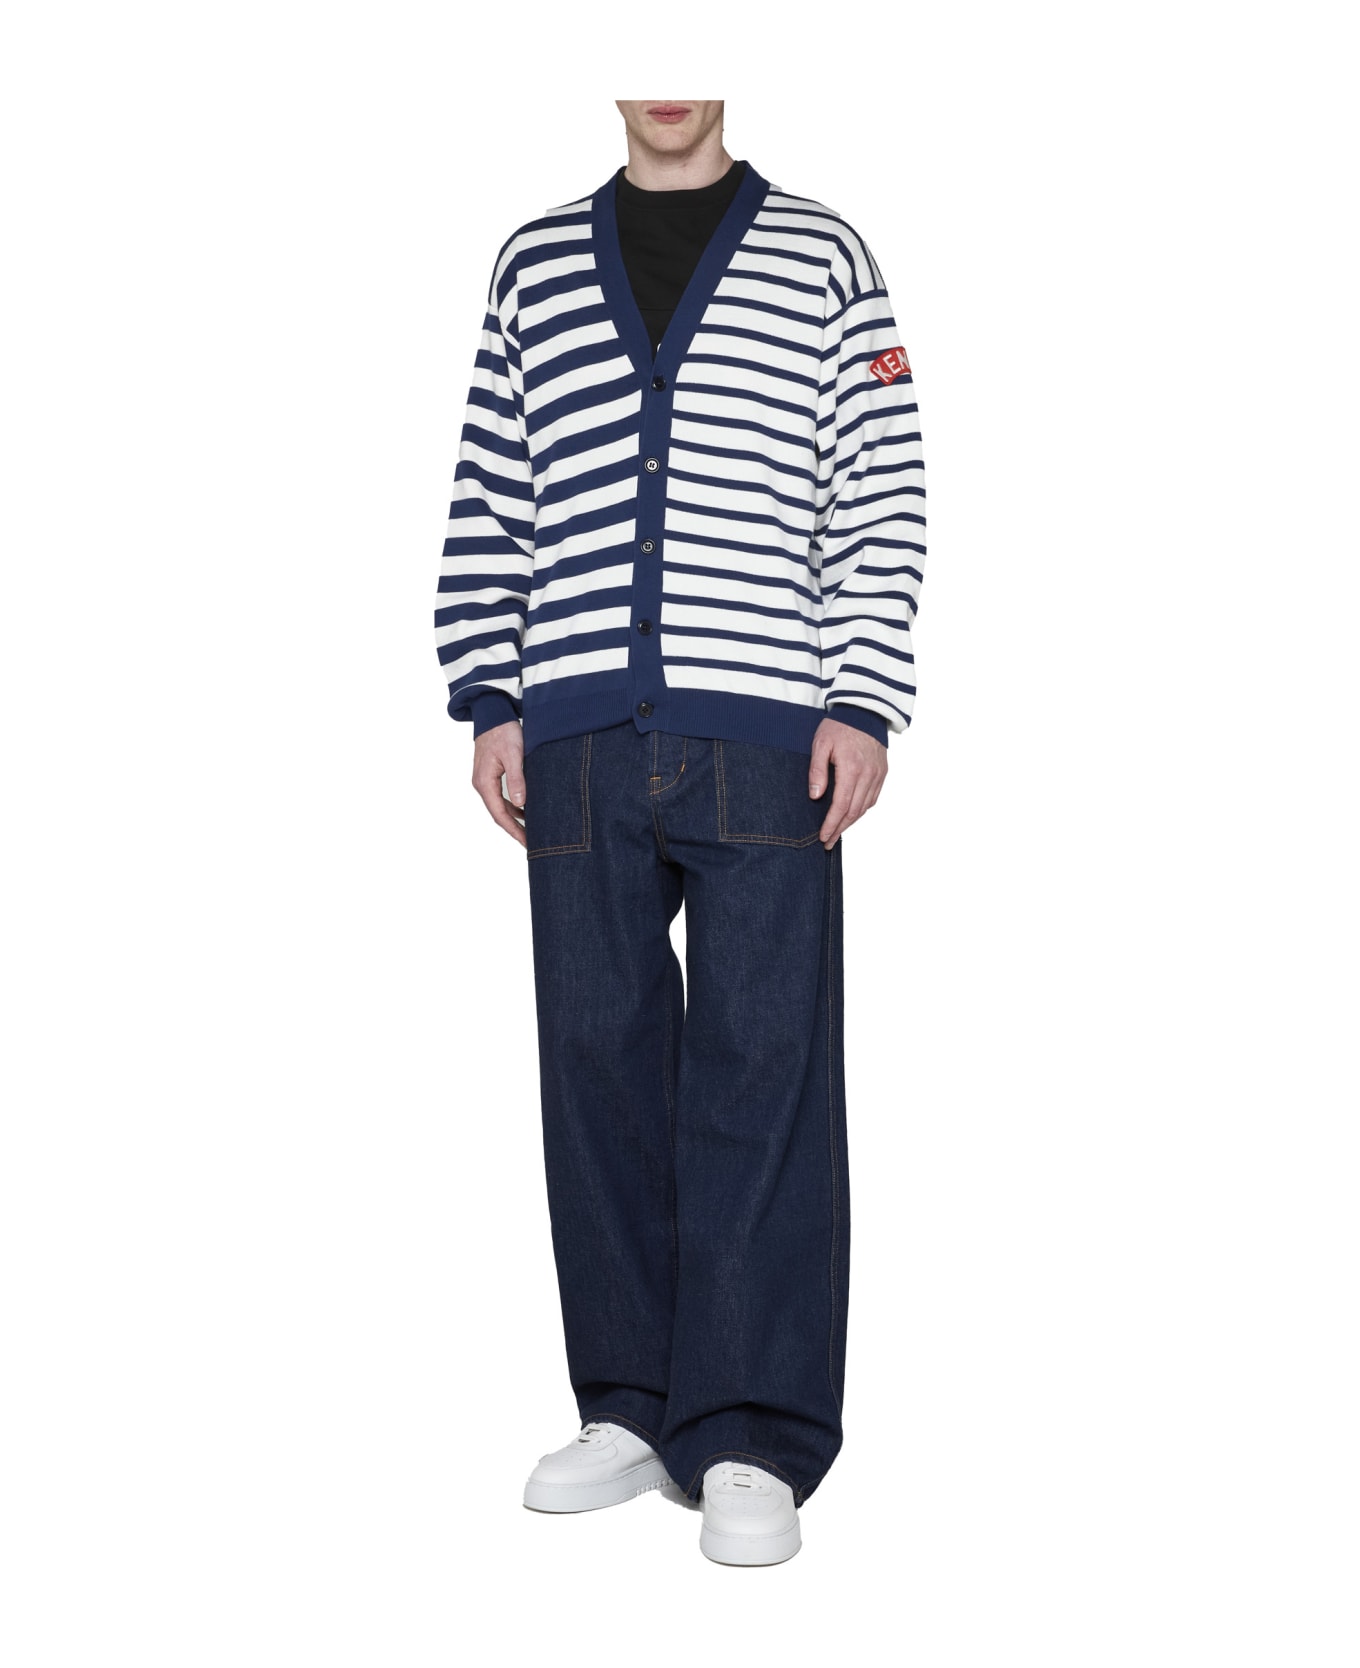 Kenzo Nautical Striped Cardigan - Blue カーディガン